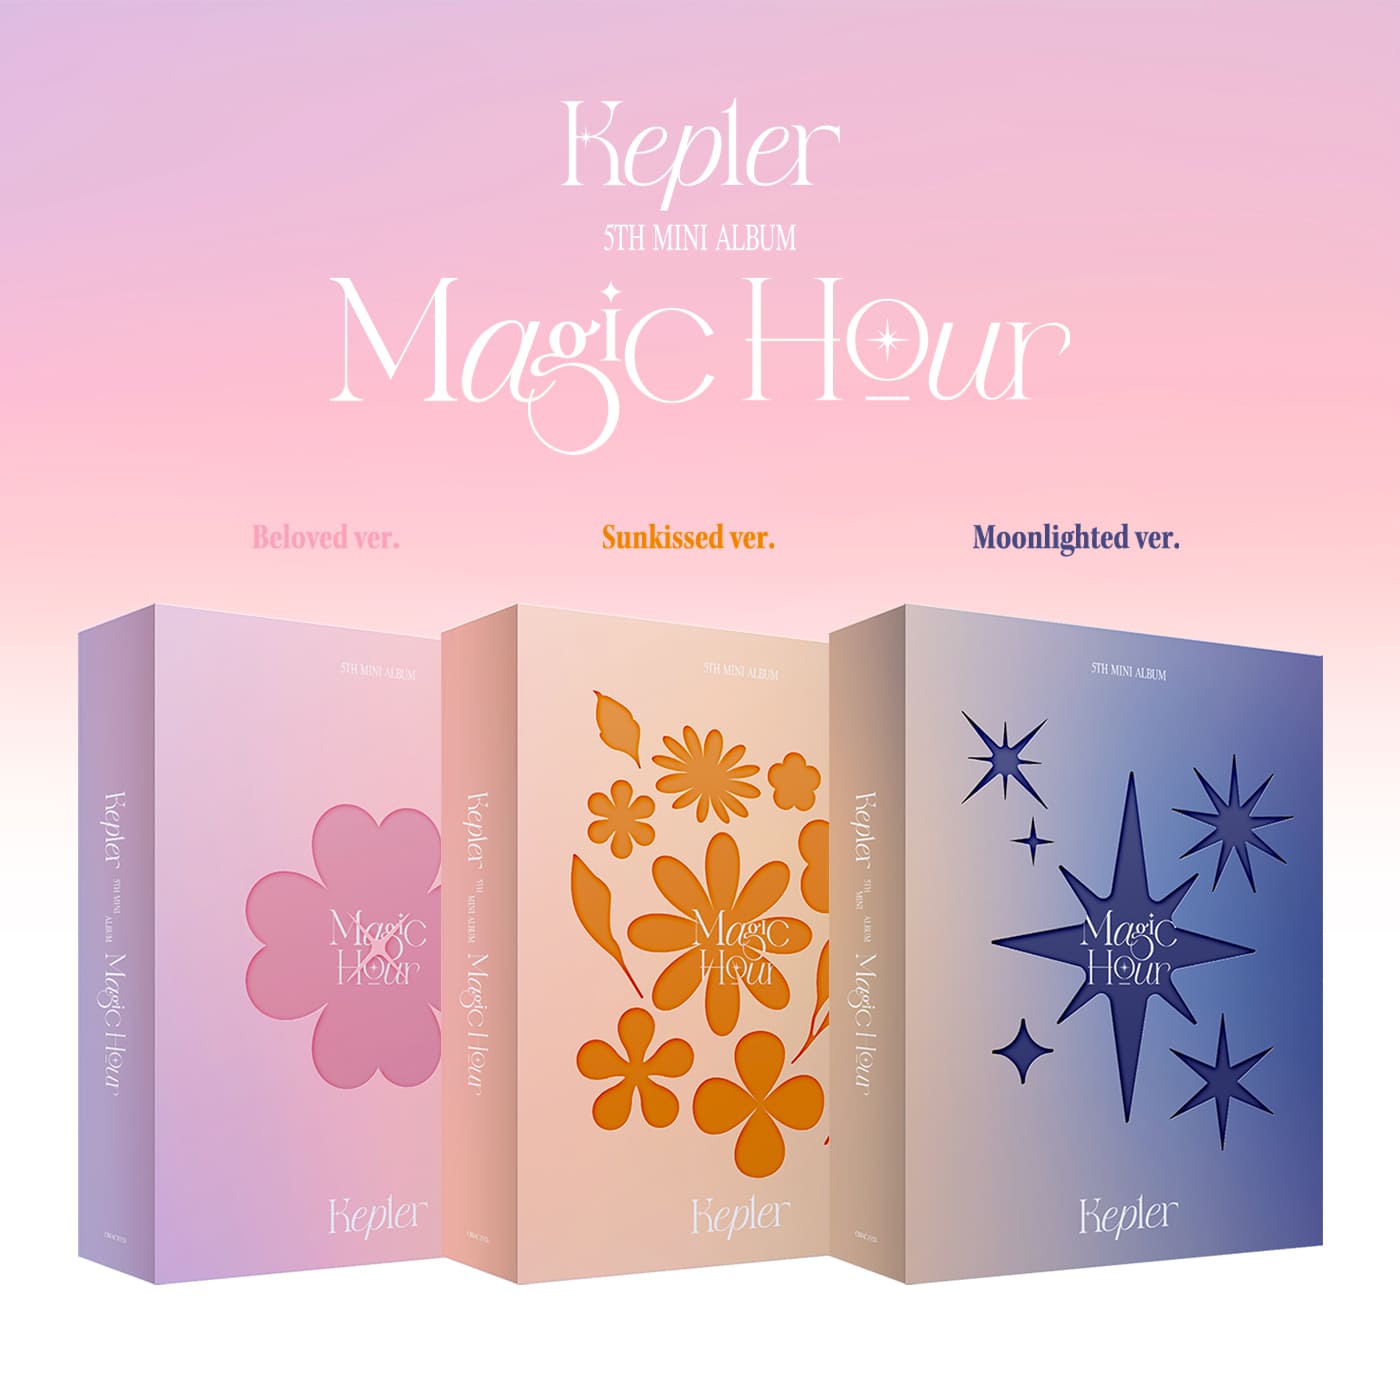 KEP1ER | Magic Hour (5th Mini Album)